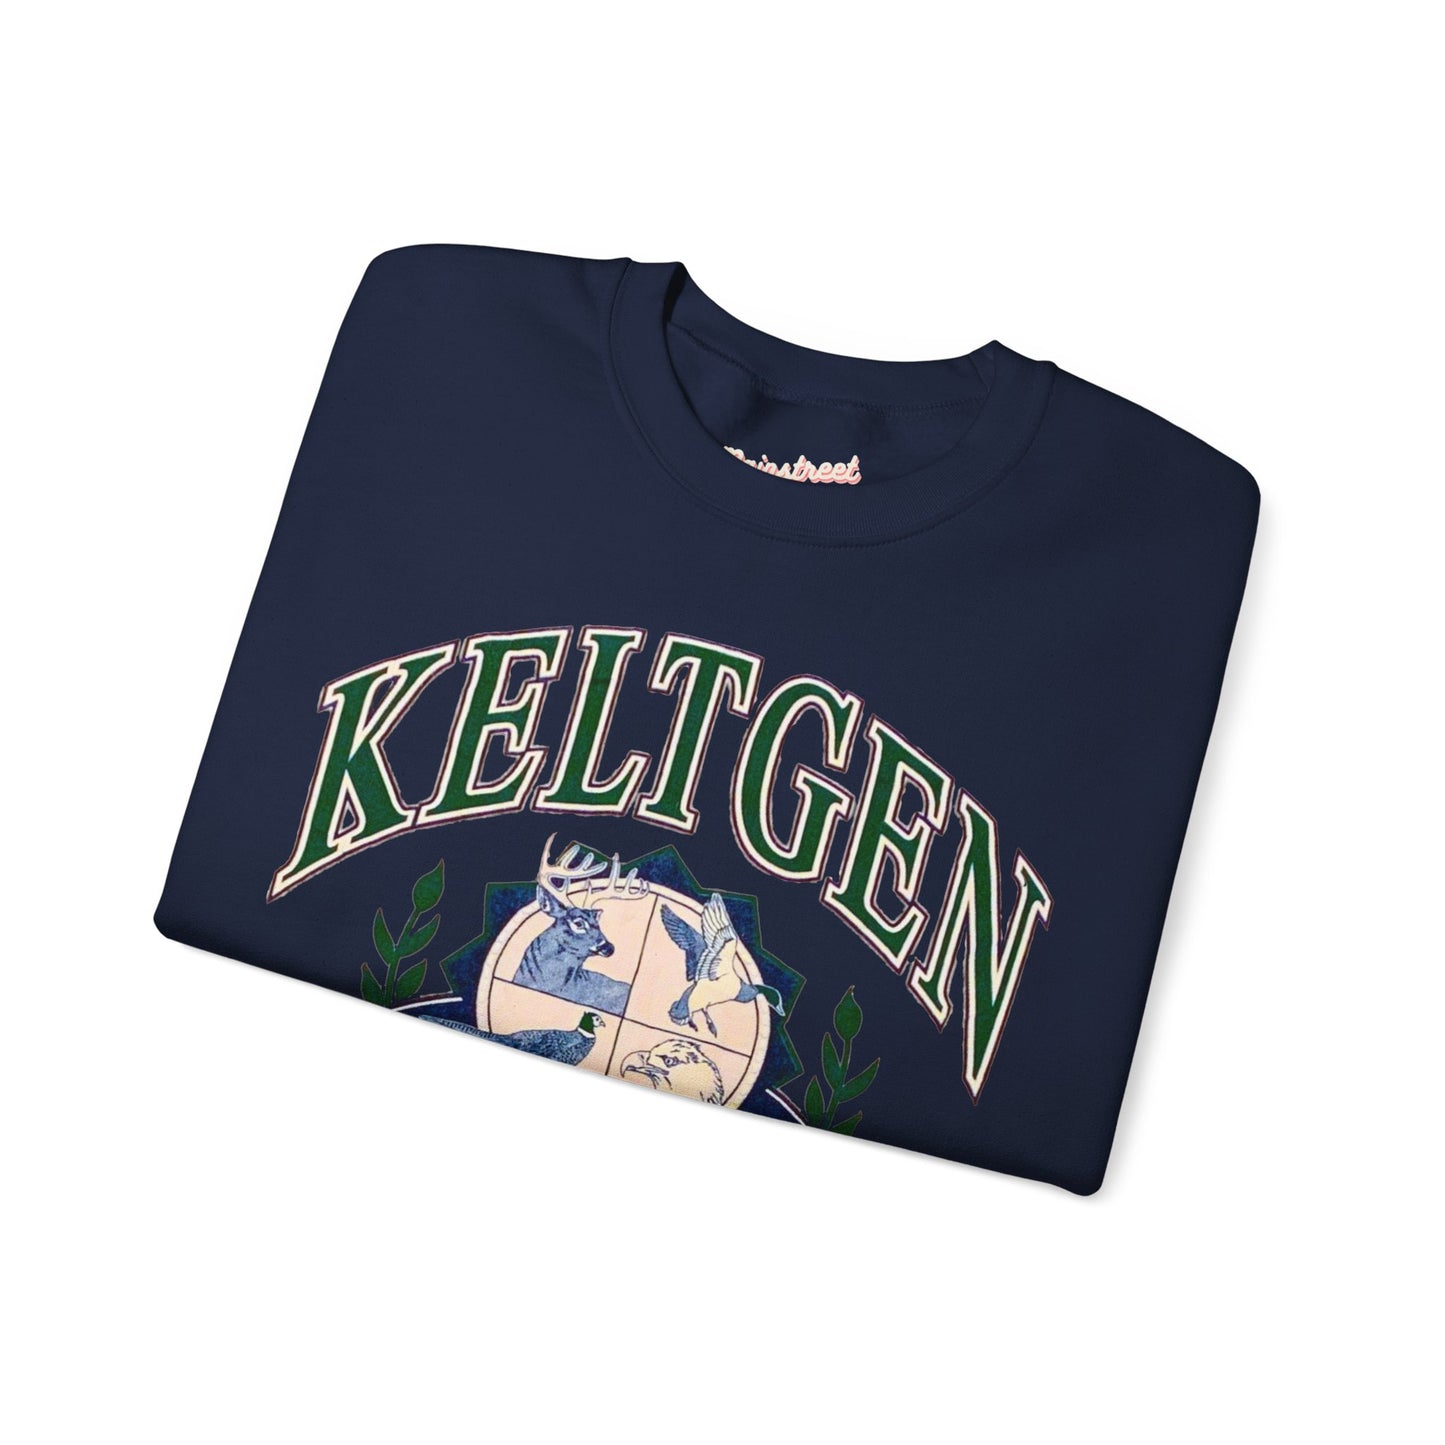 Vintage Keltgen Country Club Sweatshirt